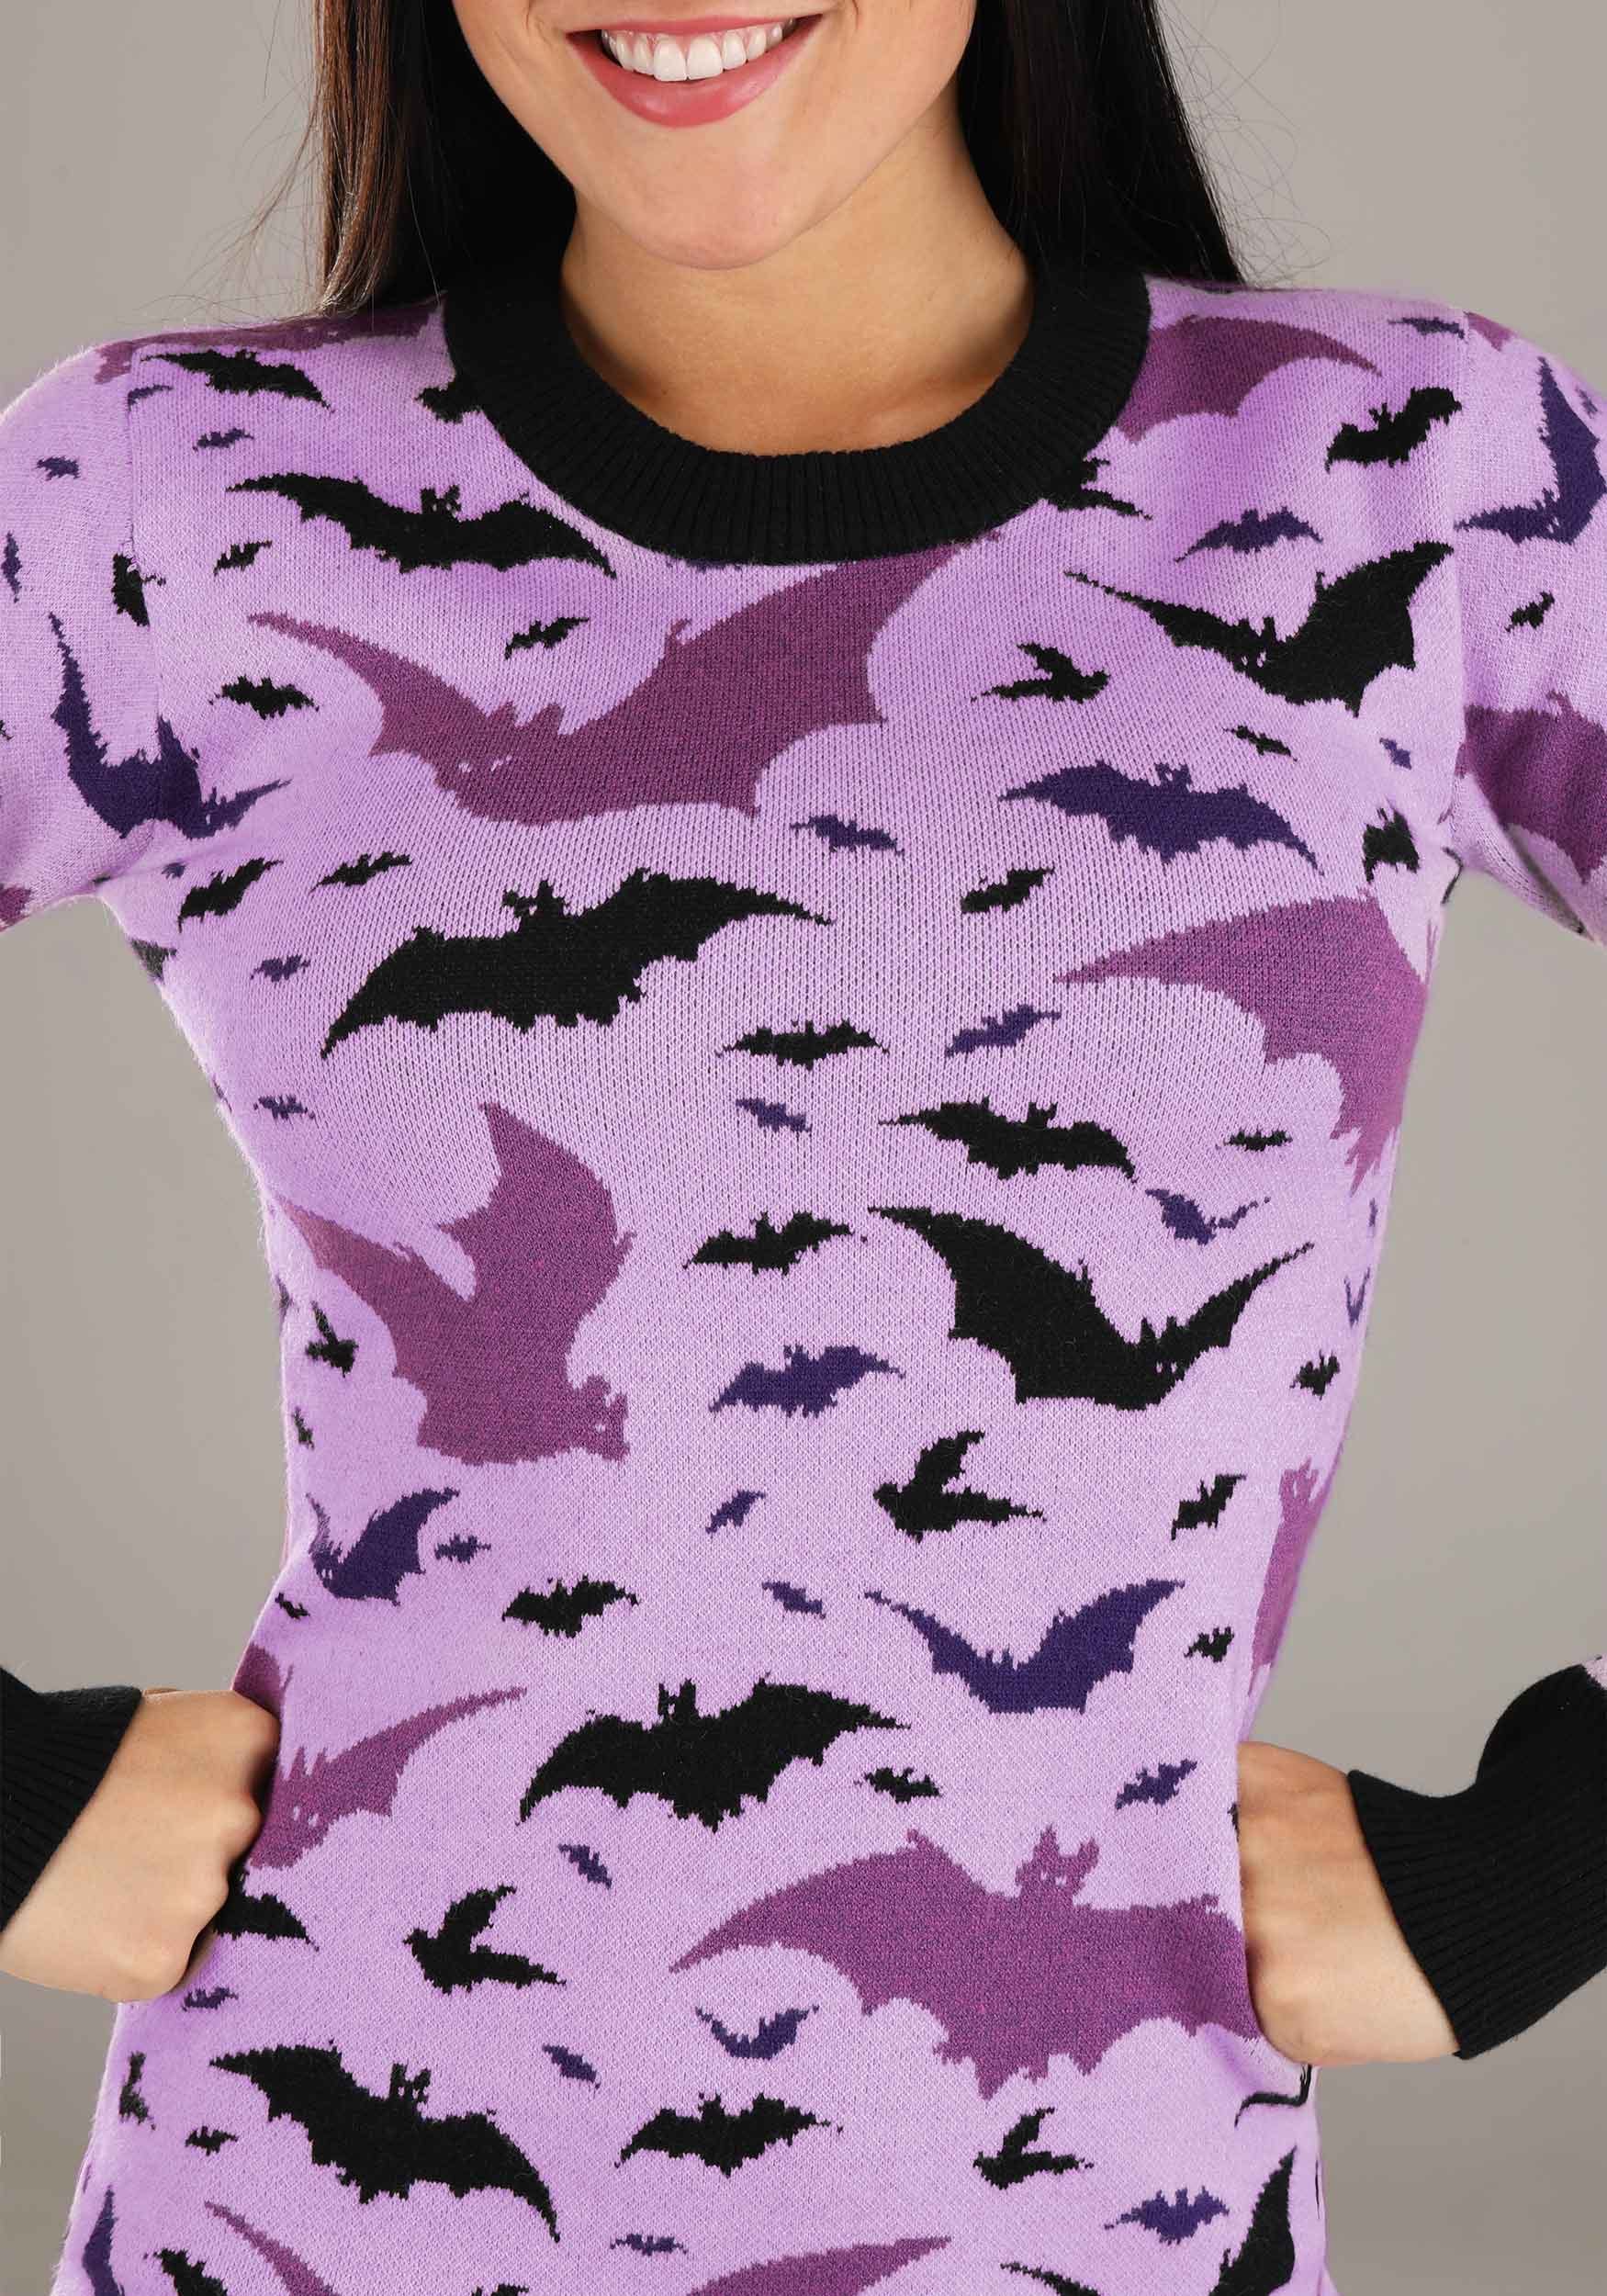 Black And Purple Bats Halloween Sweater Dress For Women